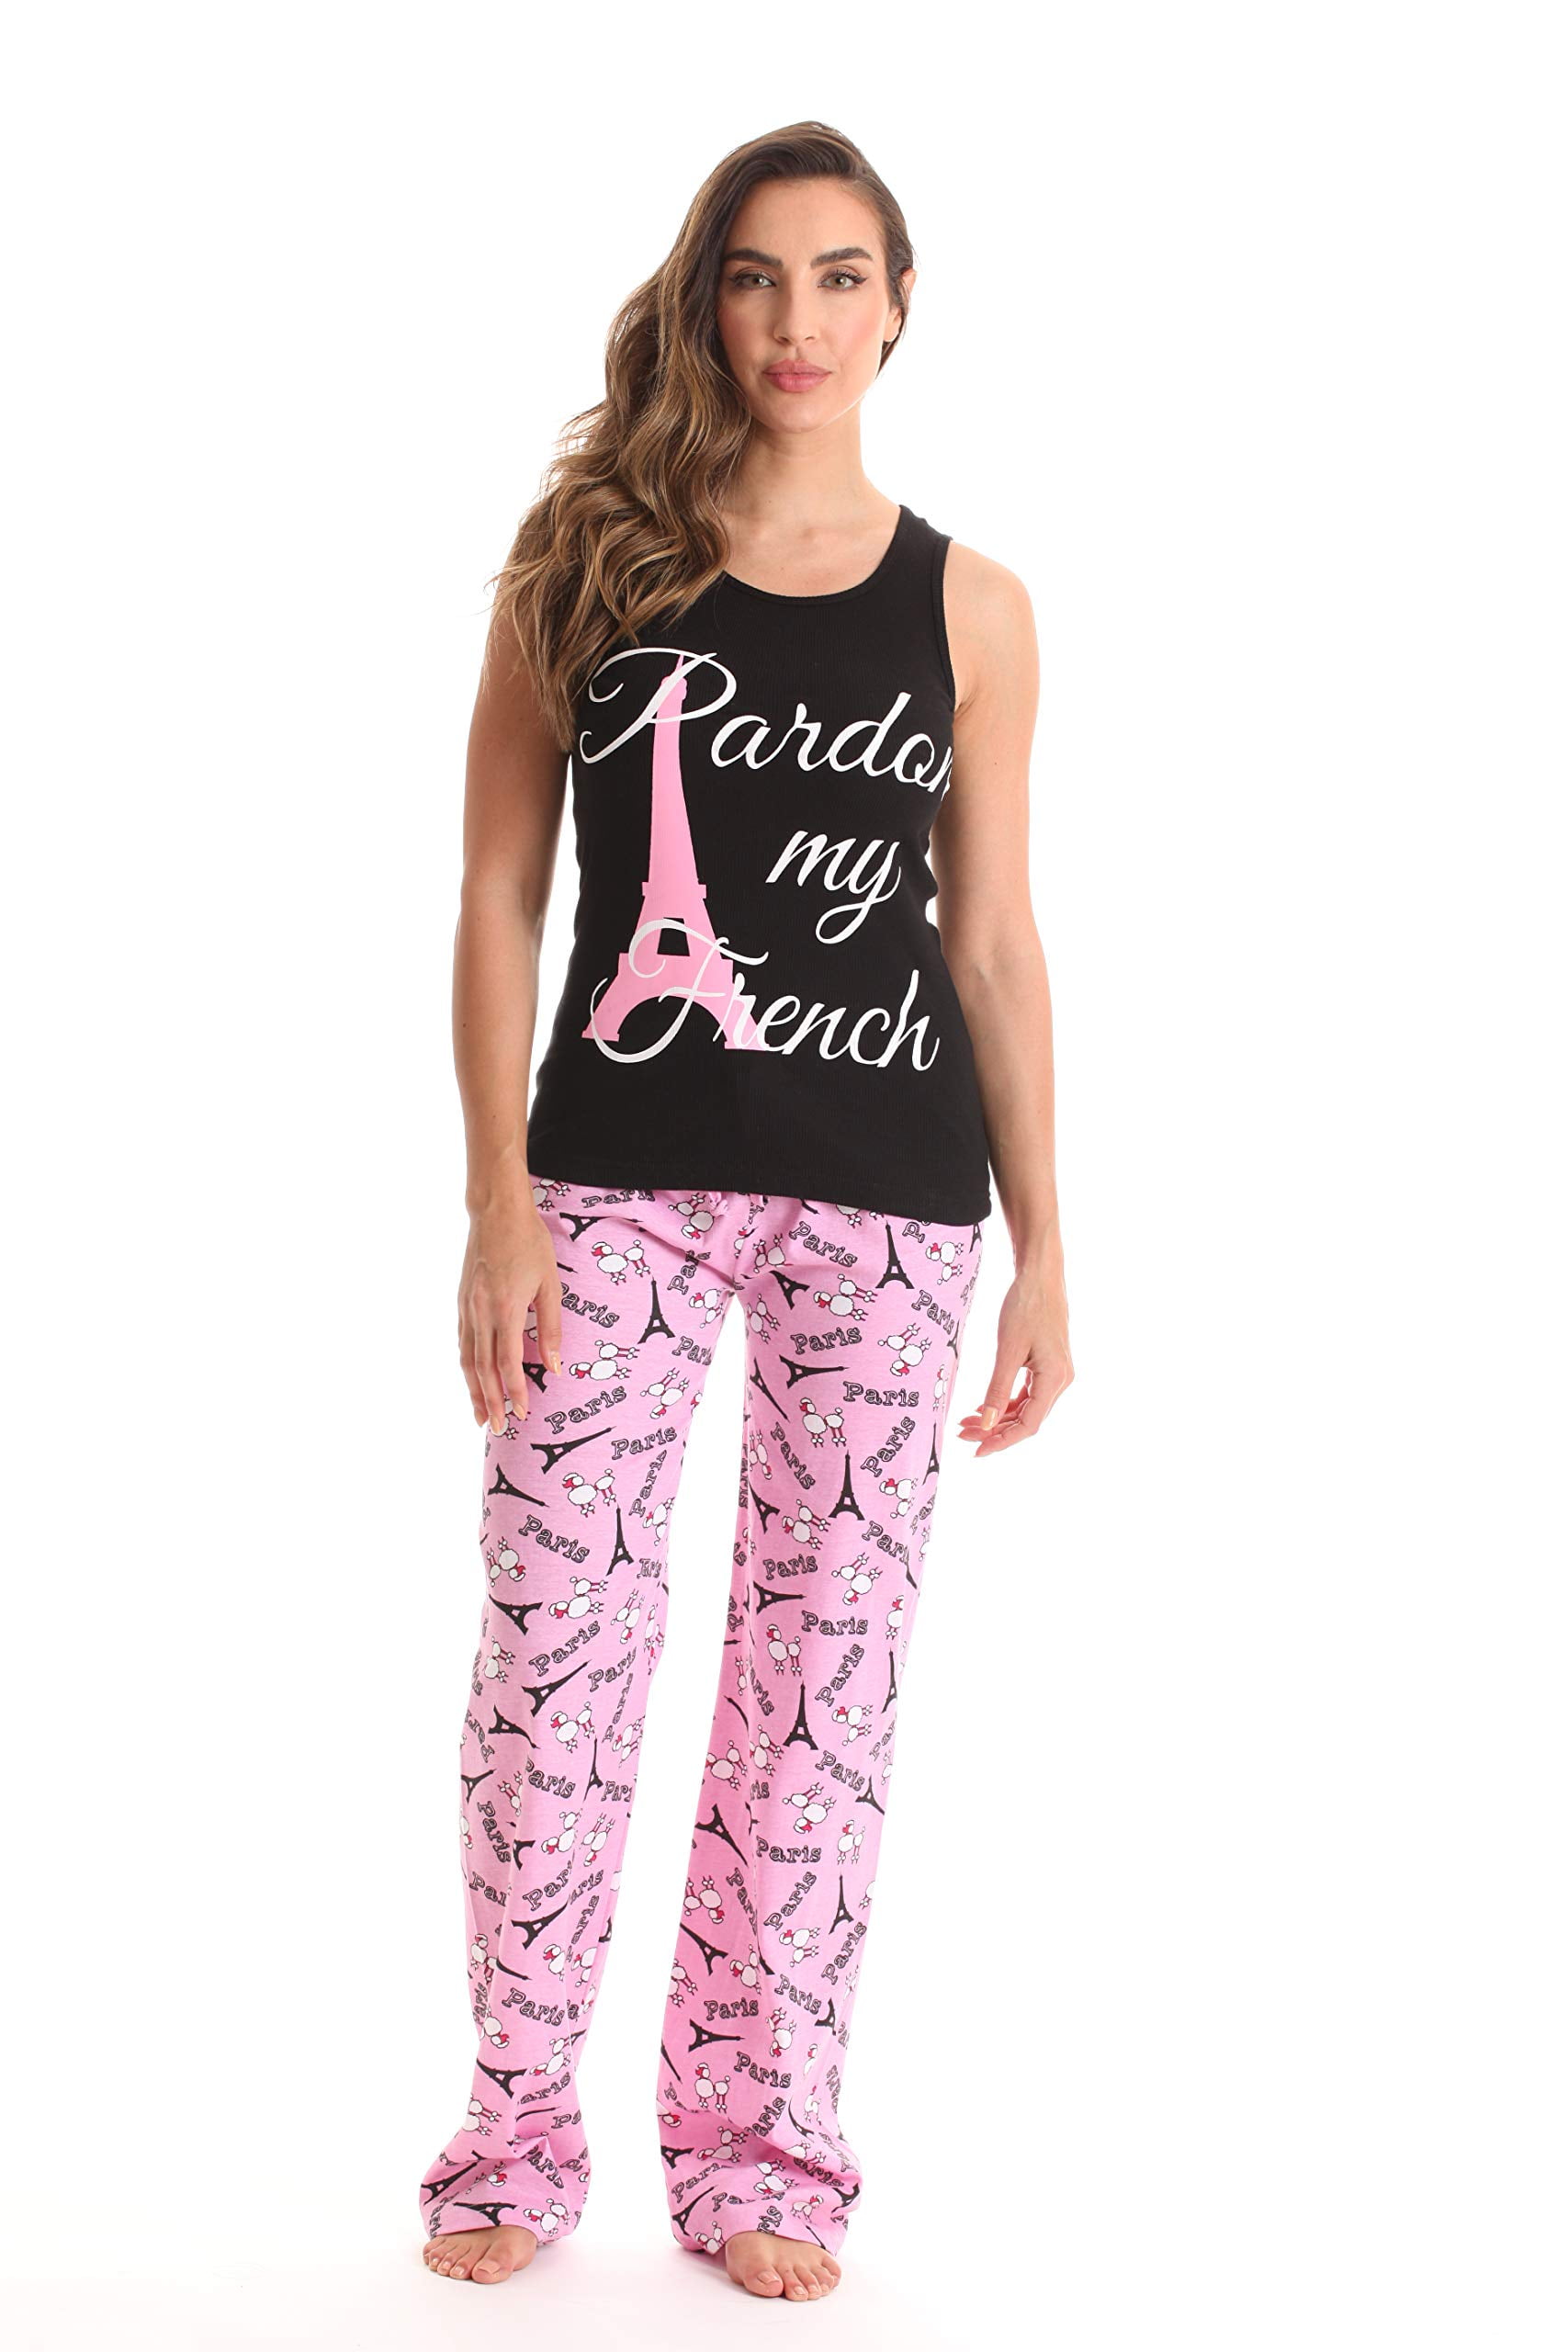 Just Love Pant Sets / Women Sleepwear / Womans Pajamas / Pjs (Black -  Pardon my French, Large) 